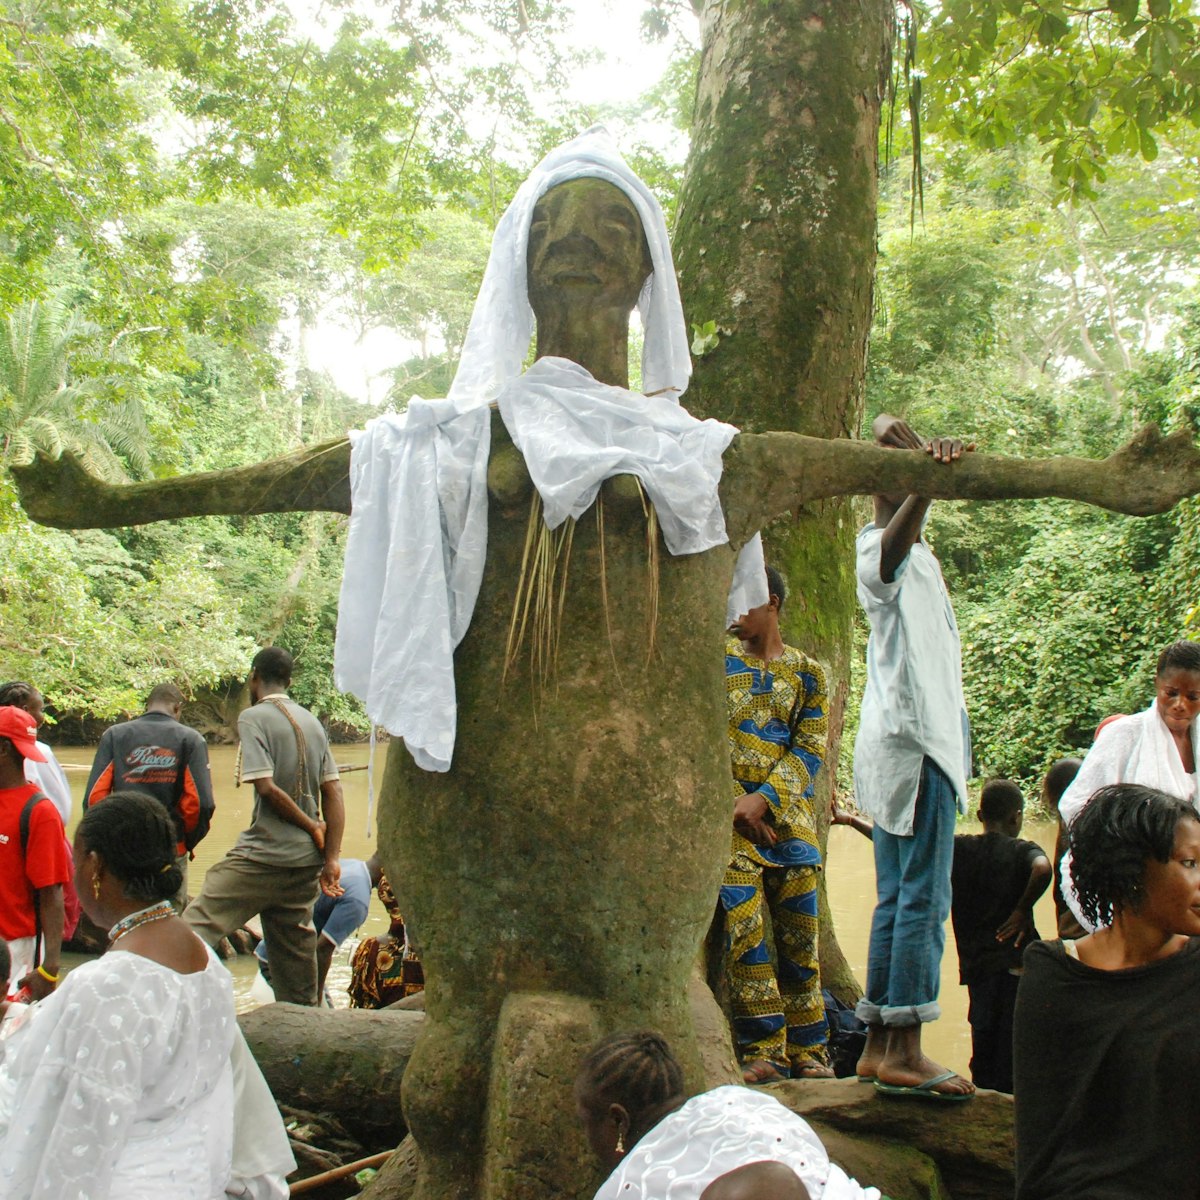 Osun State, Nigeria - August 15th, 2015 - Osun shrine by the river.
2294601747